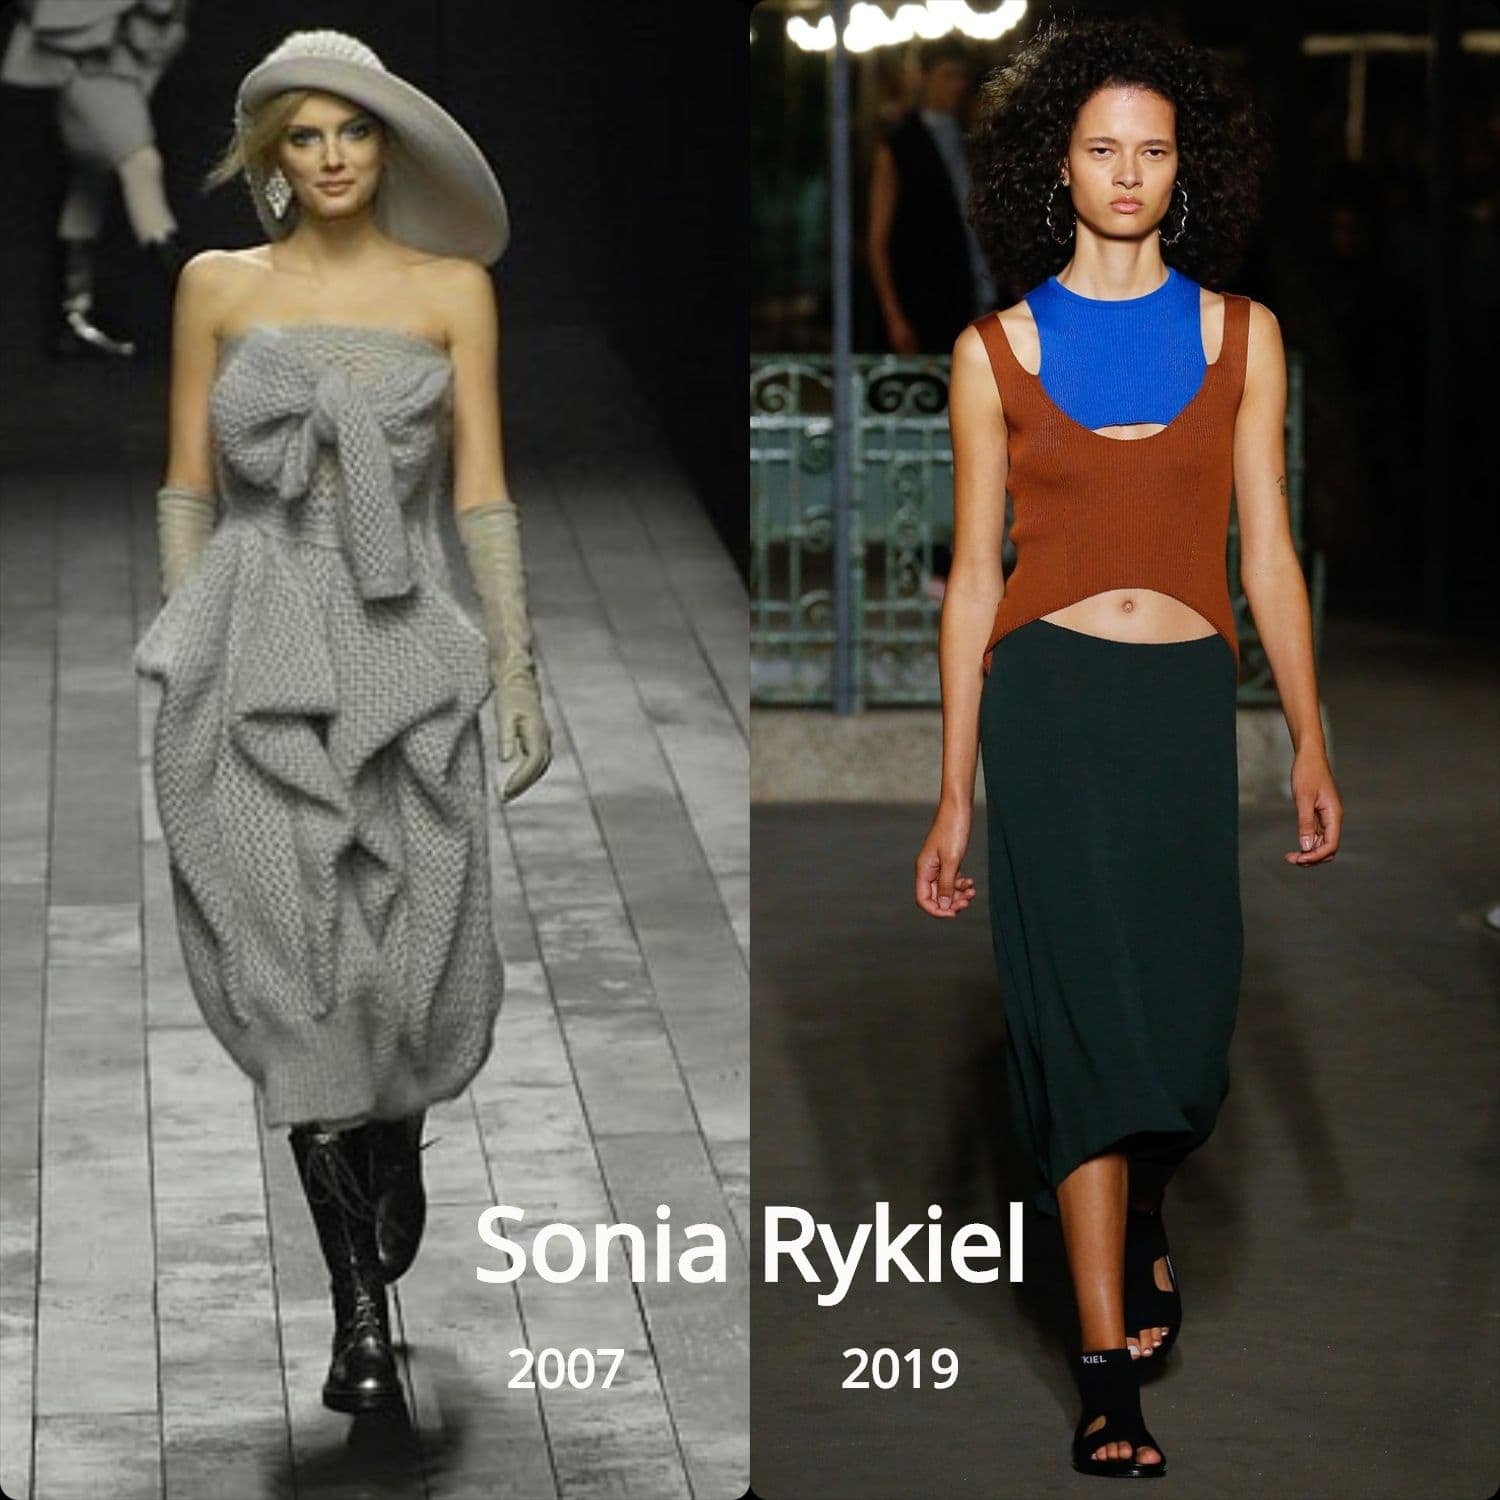 Sonia Rykiel died liquidation bankruptcy. 2007 - creative work of Sonia Rykiel, 2019 - work of  Julie de Libran 